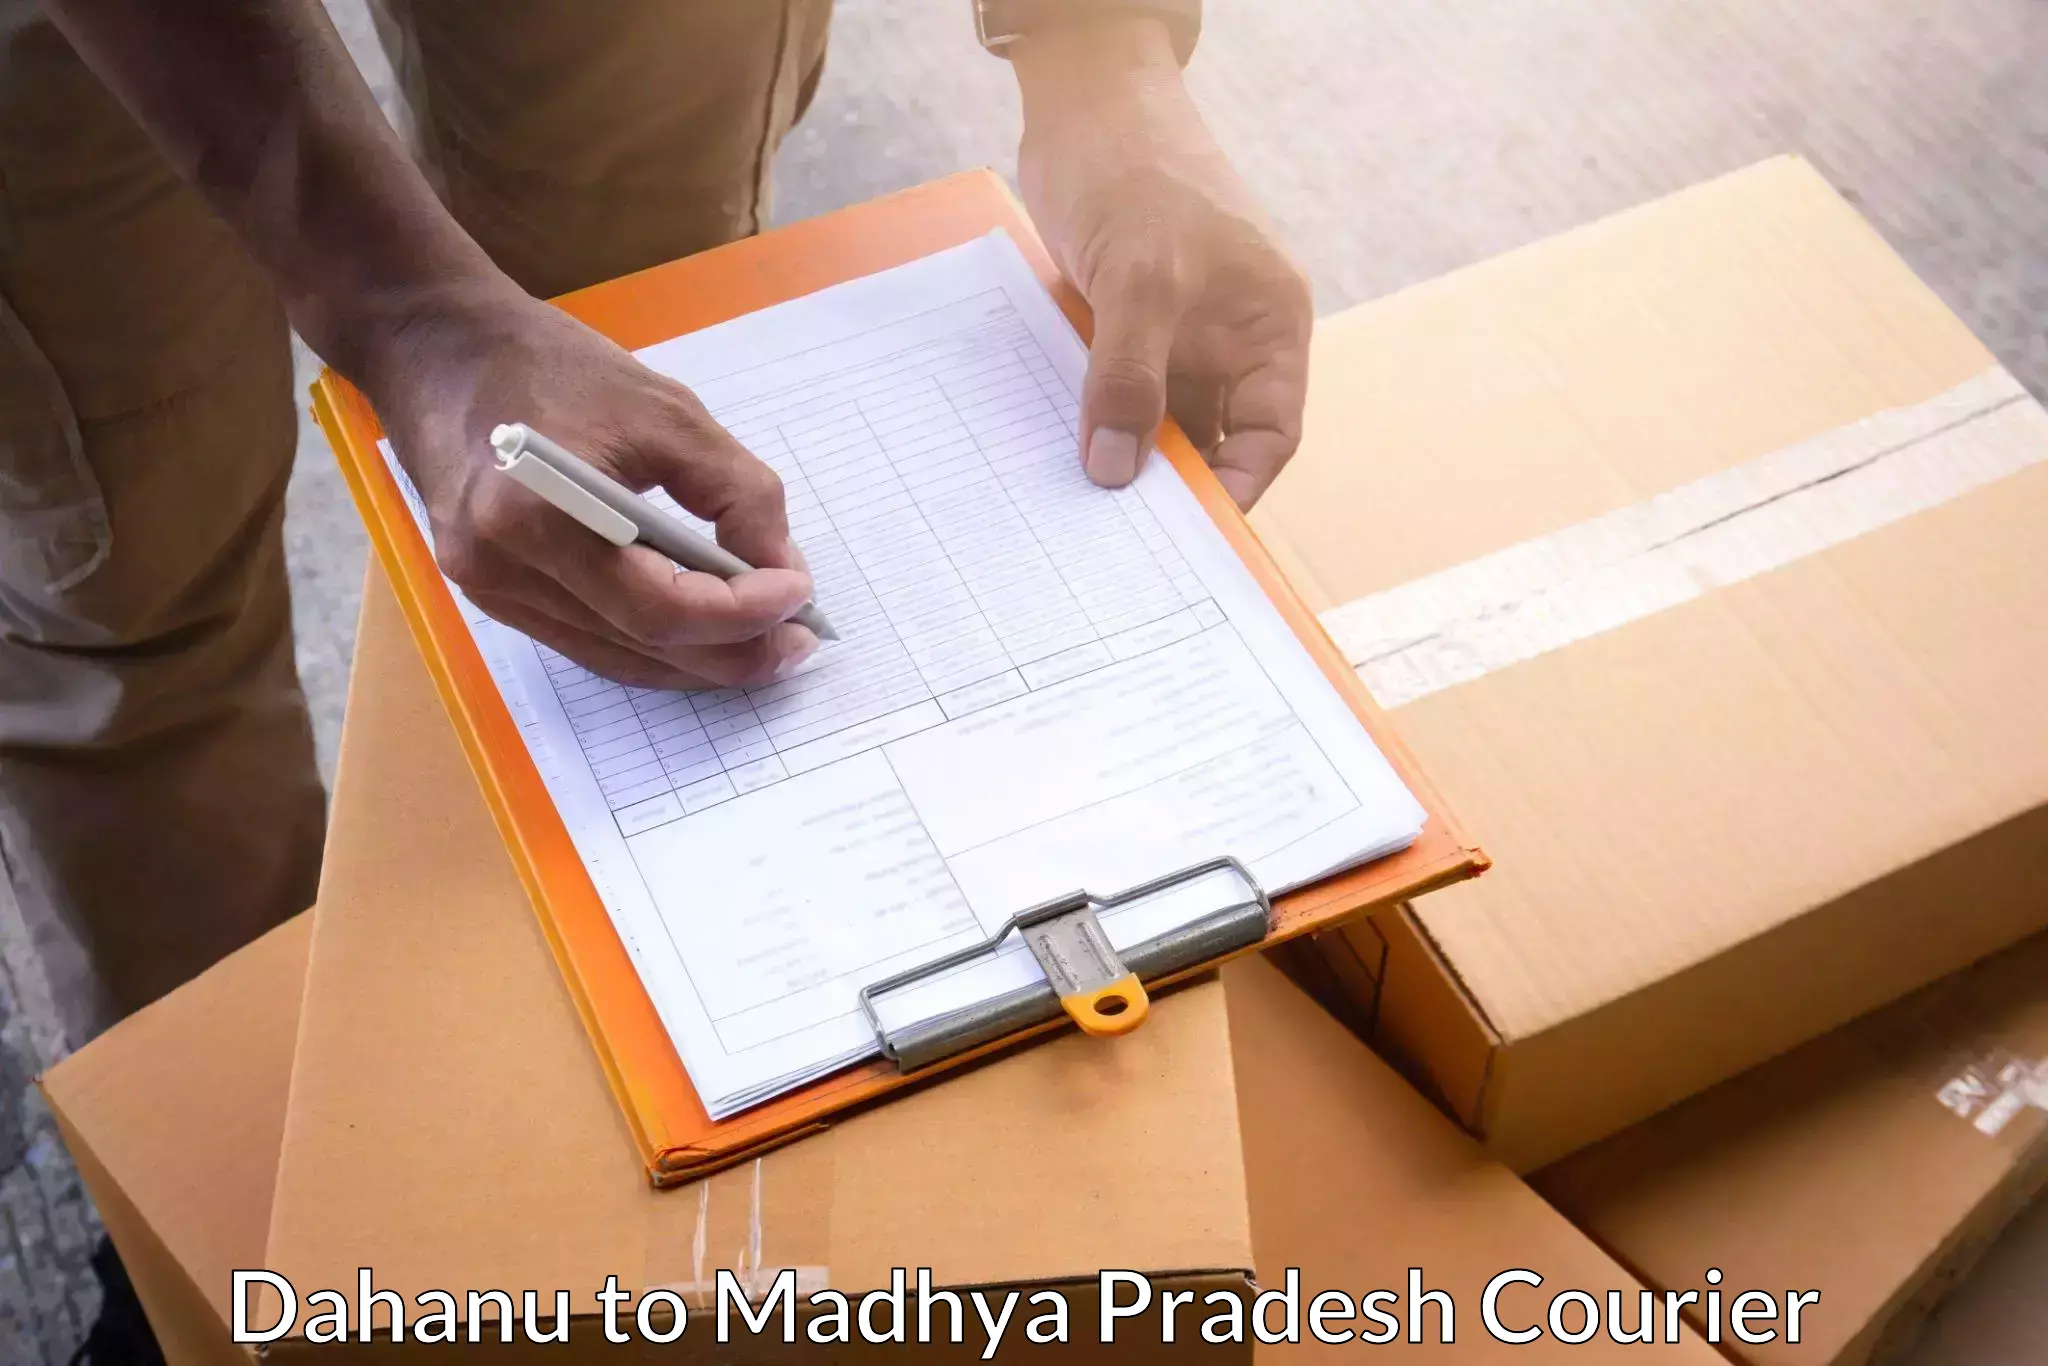 Logistics service provider Dahanu to Vidisha